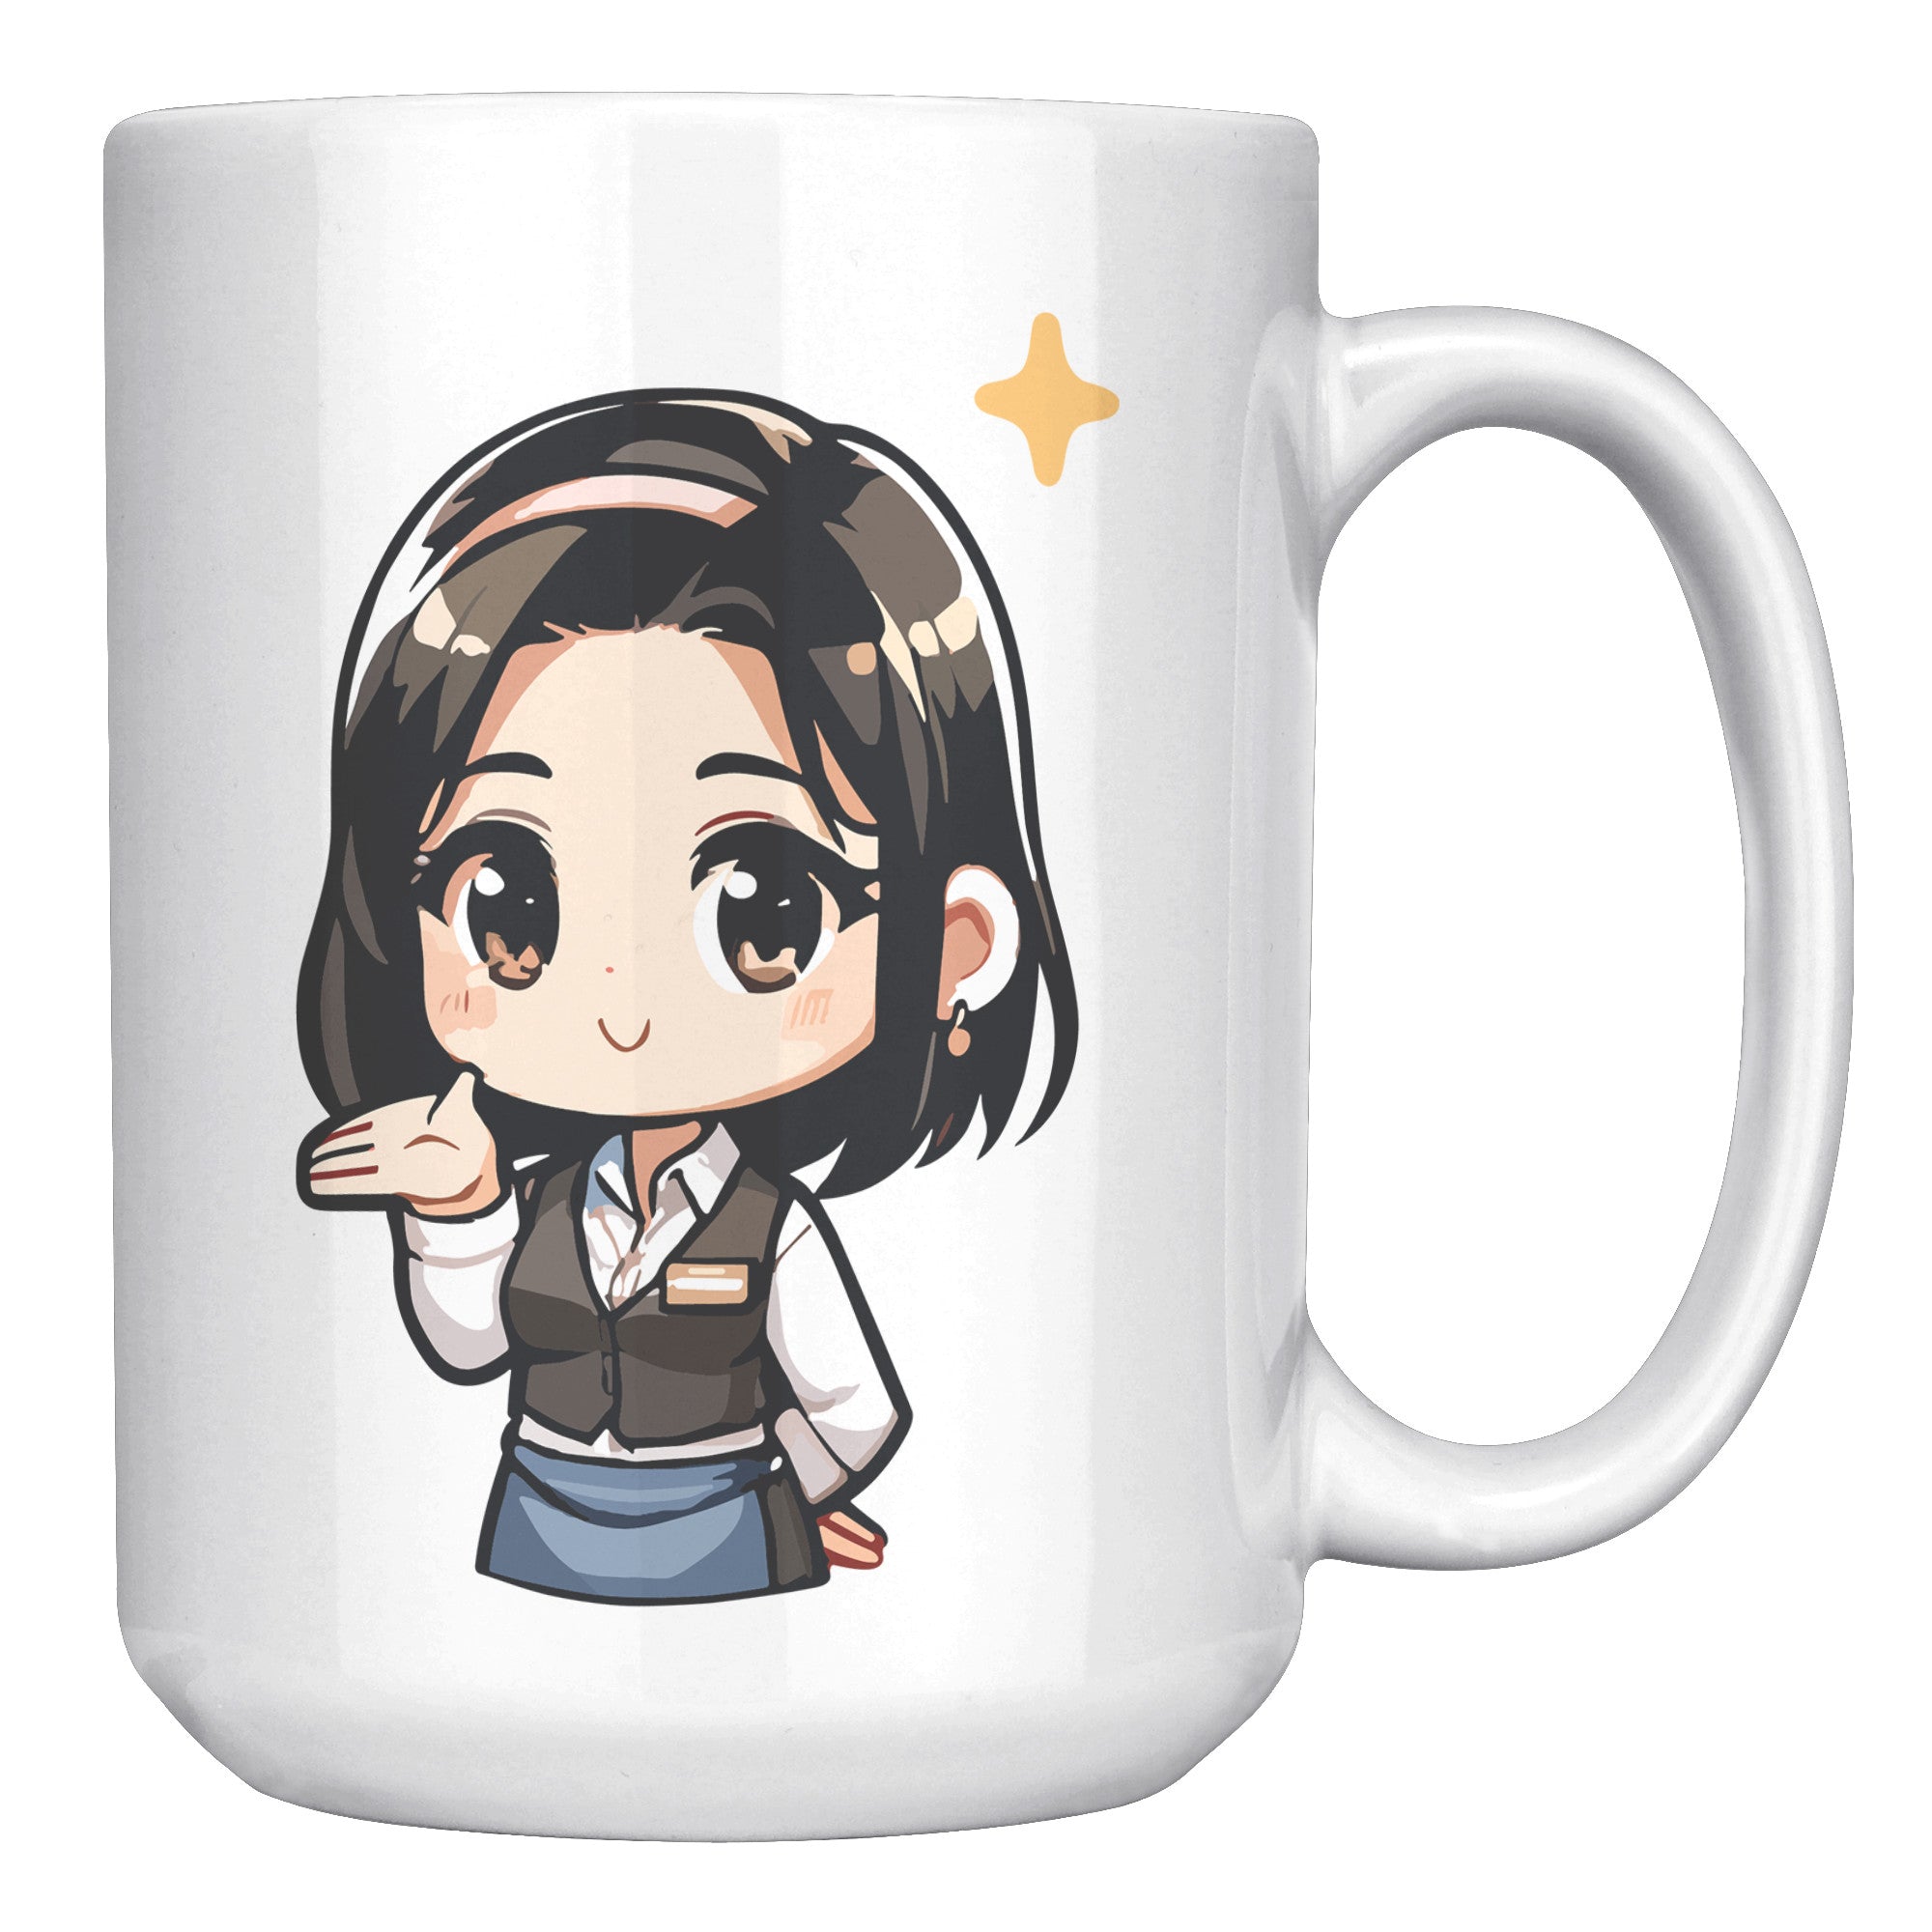 "Marites Gossip Queen Coffee Mug - Cute Cartoon 'Ano Ang Latest?' Cup - Perfect Chismosa Gift - Filipino Slang Tea Mug" - F1